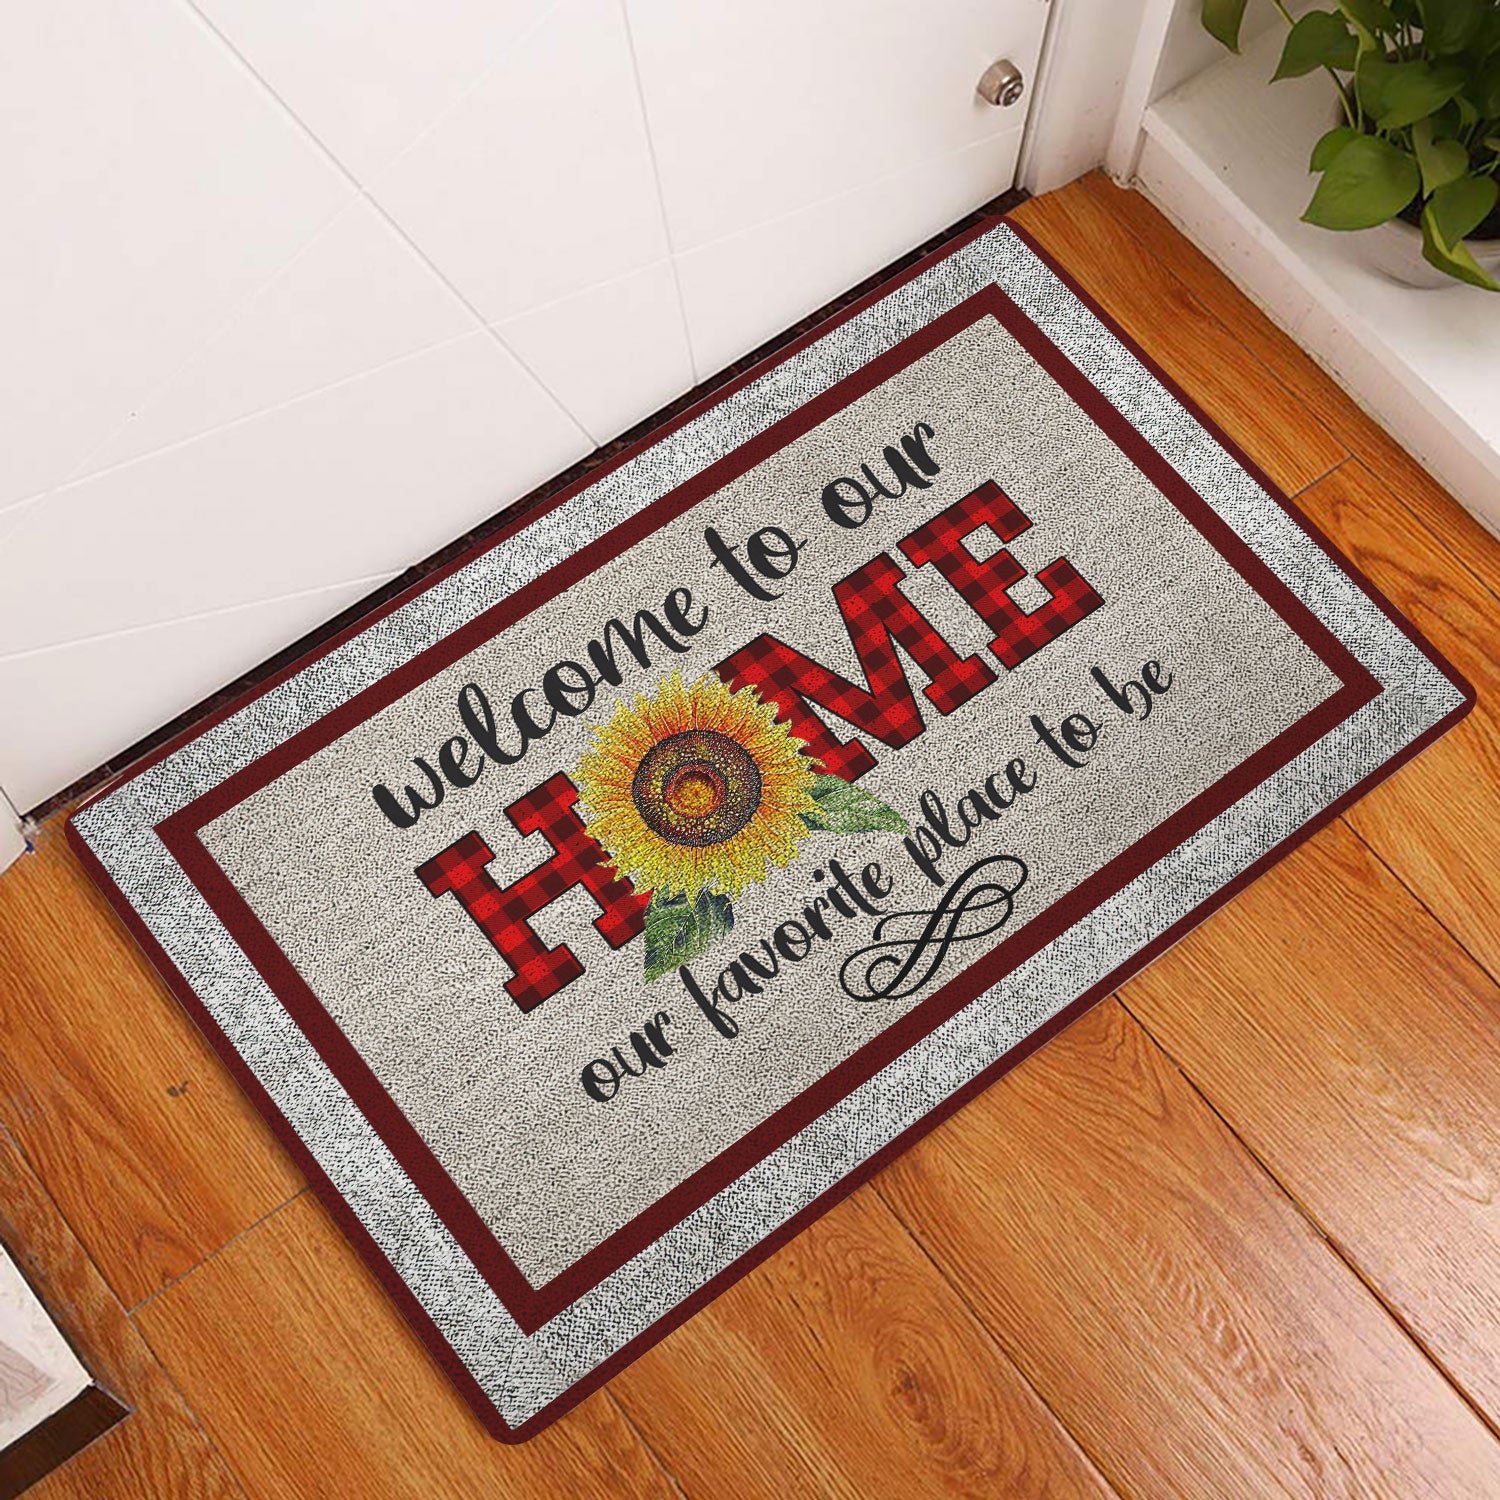 Ohaprints-Doormat-Outdoor-Indoor-Welcome-To-Our-Home-Sunflower-Red-Plaid-Pattern-Rubber-Door-Mat-1961-